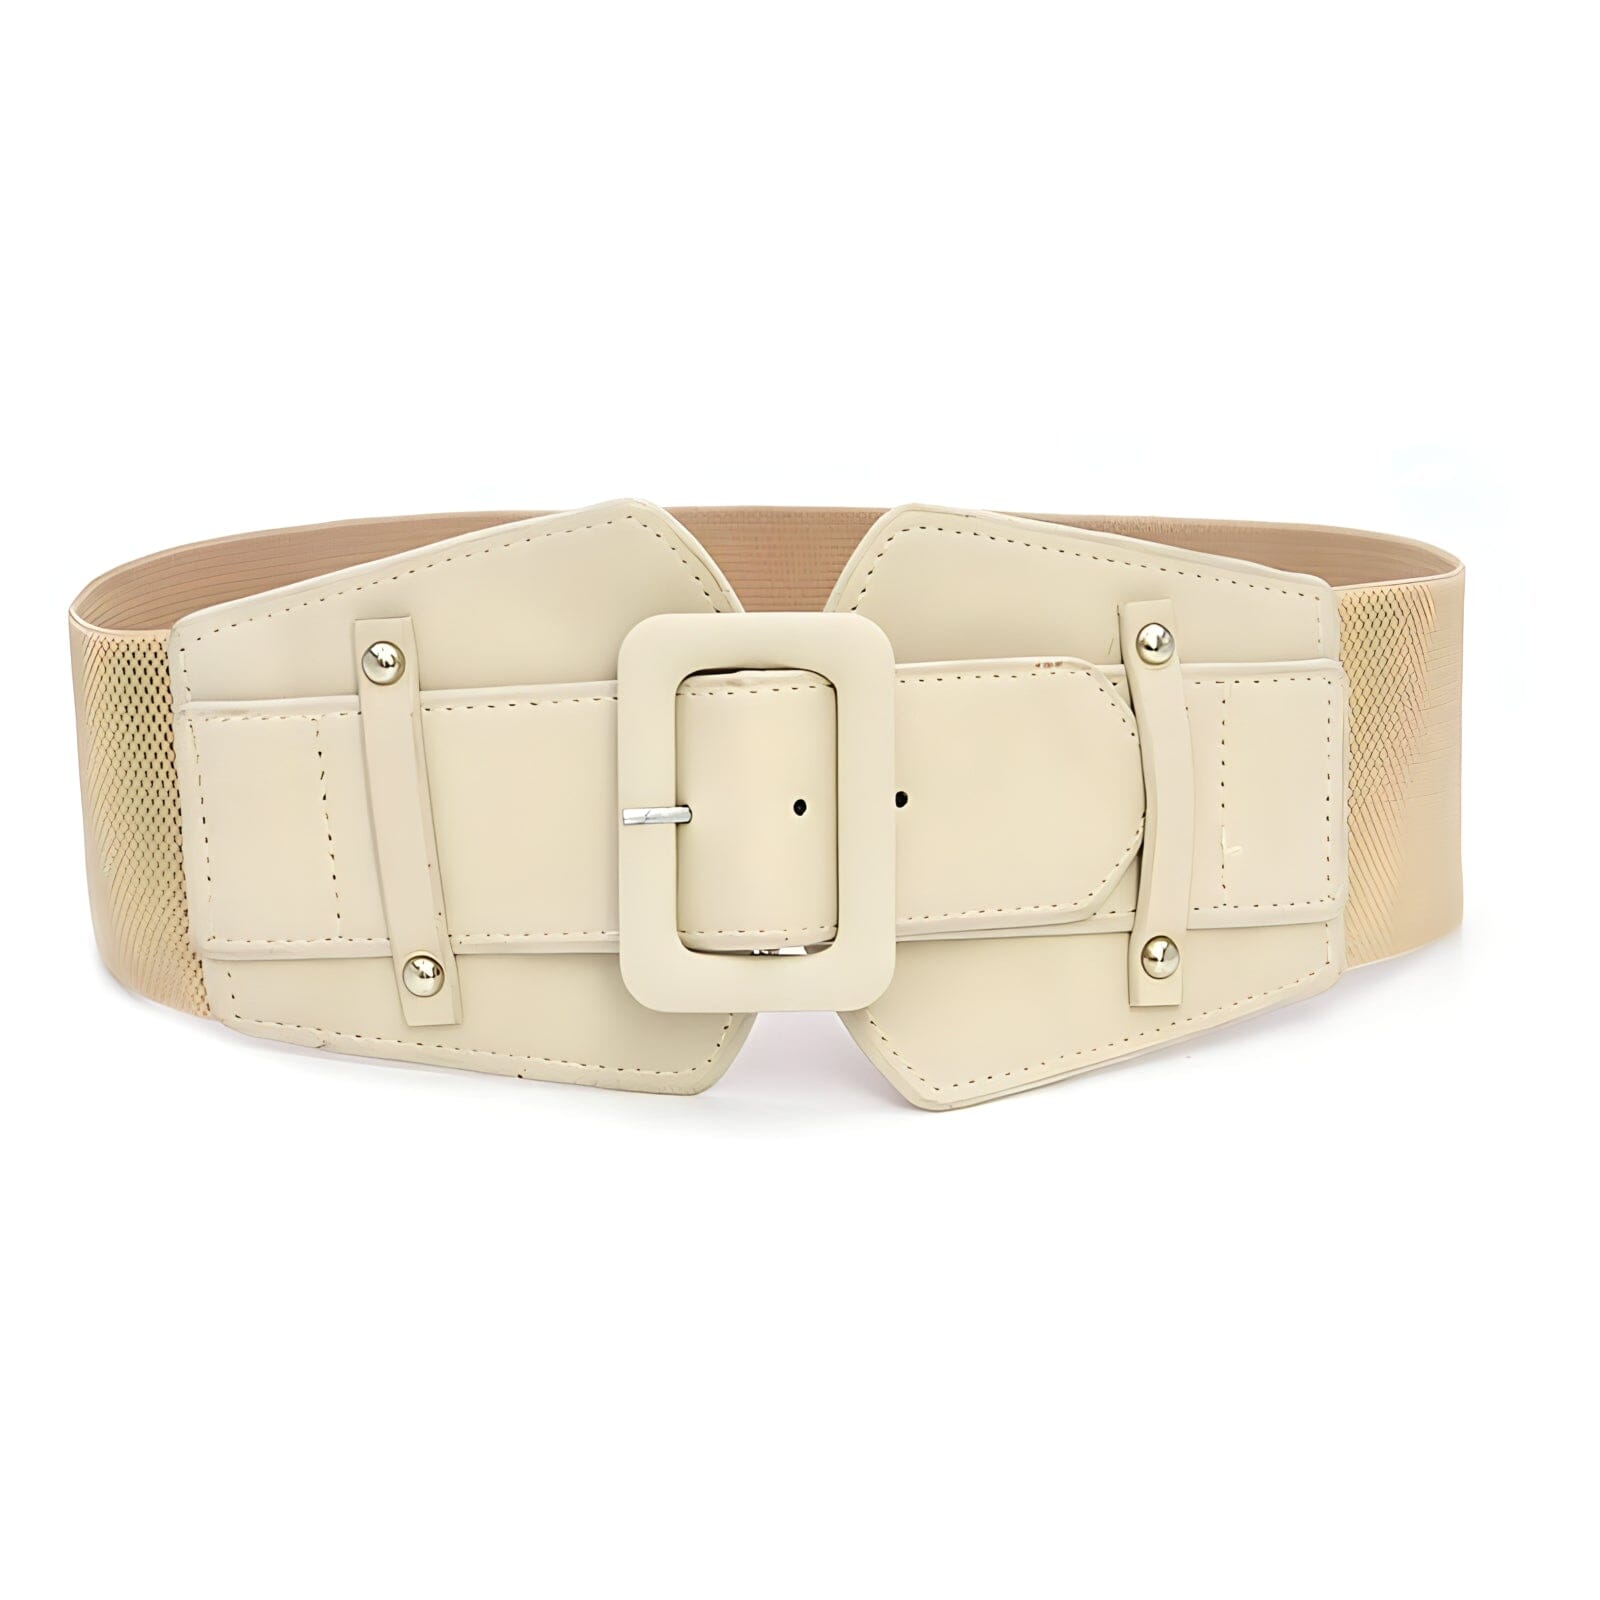 The Melina Faux Leather Waistband Belt - Multiple Colors 0 SA Styles Khaki 70cm 